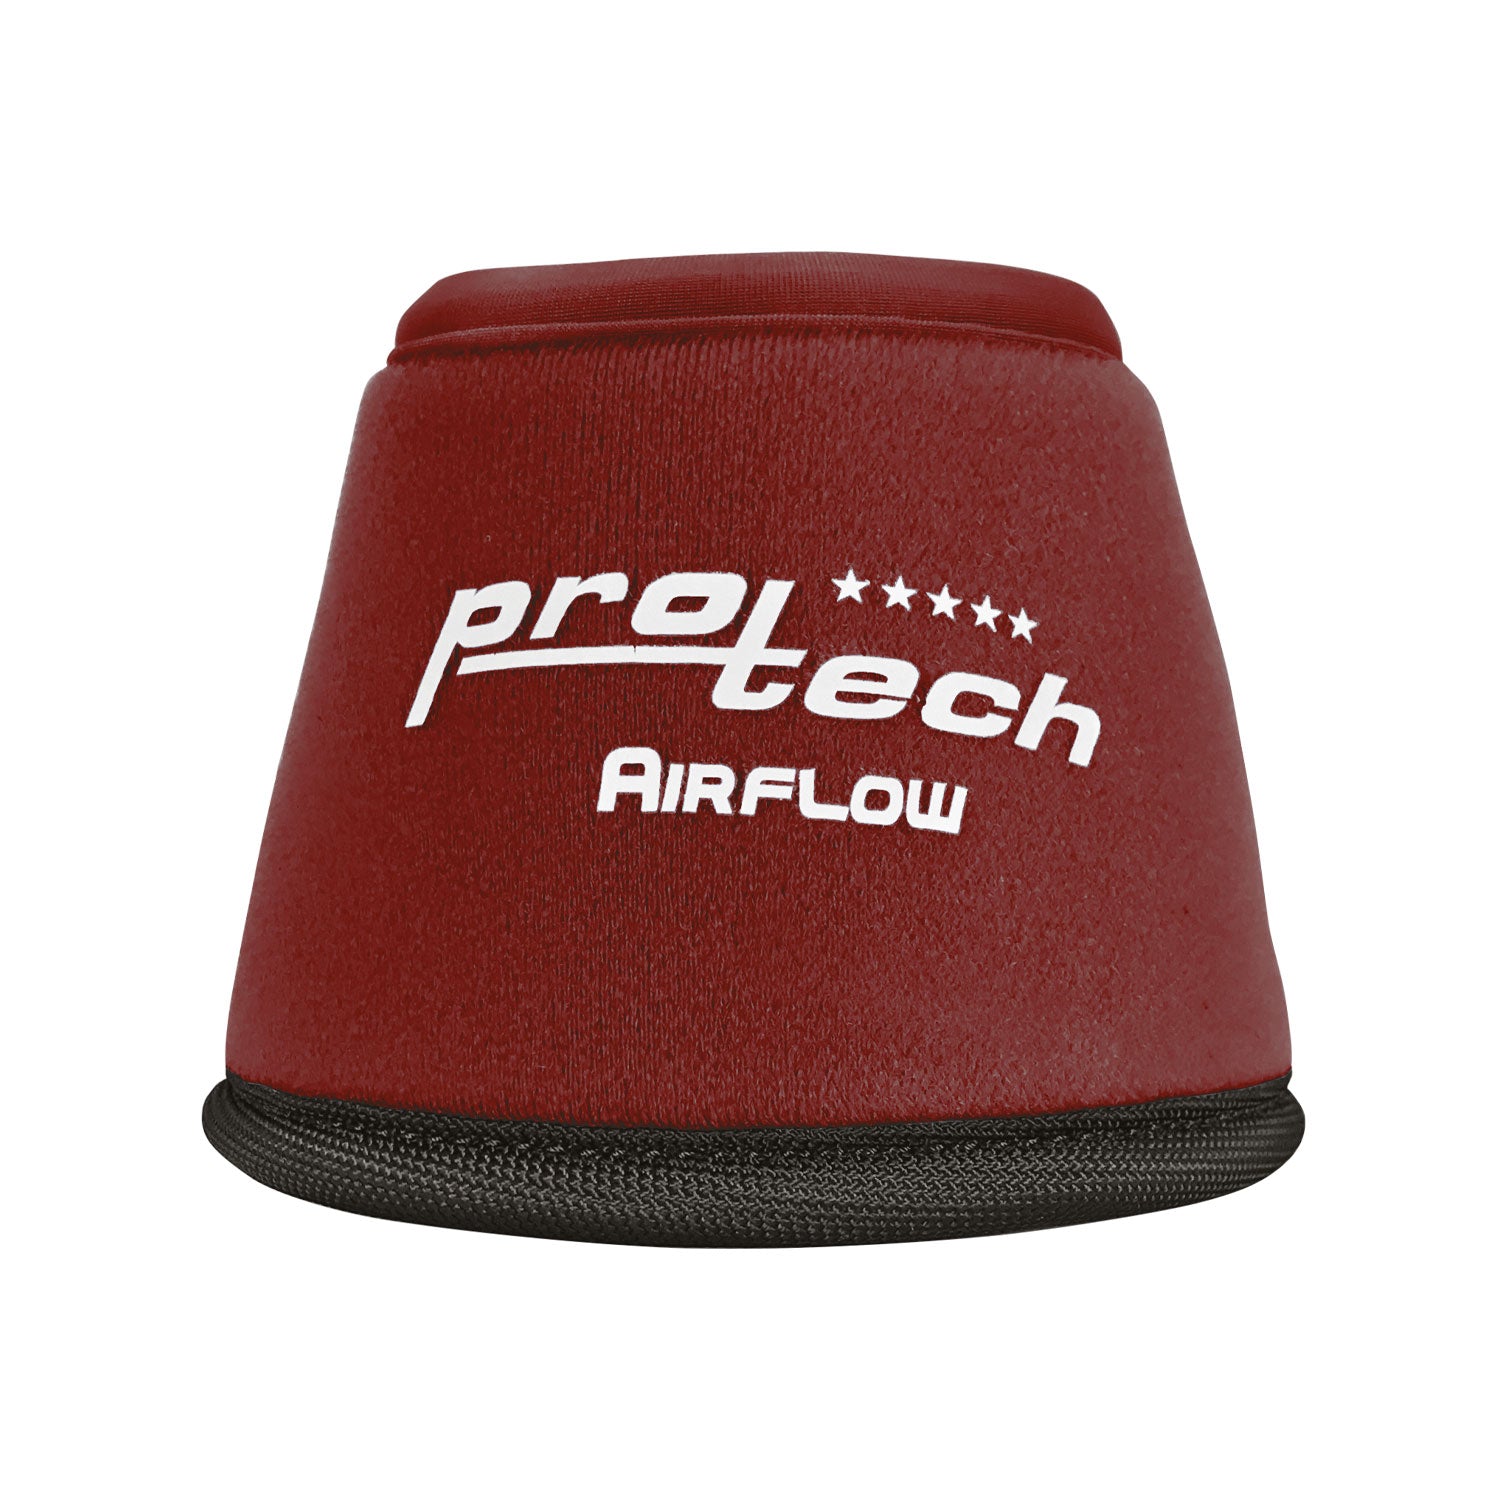 Paraglomi Performa Airflow in Neoprene Colored con chiusura in Velcro